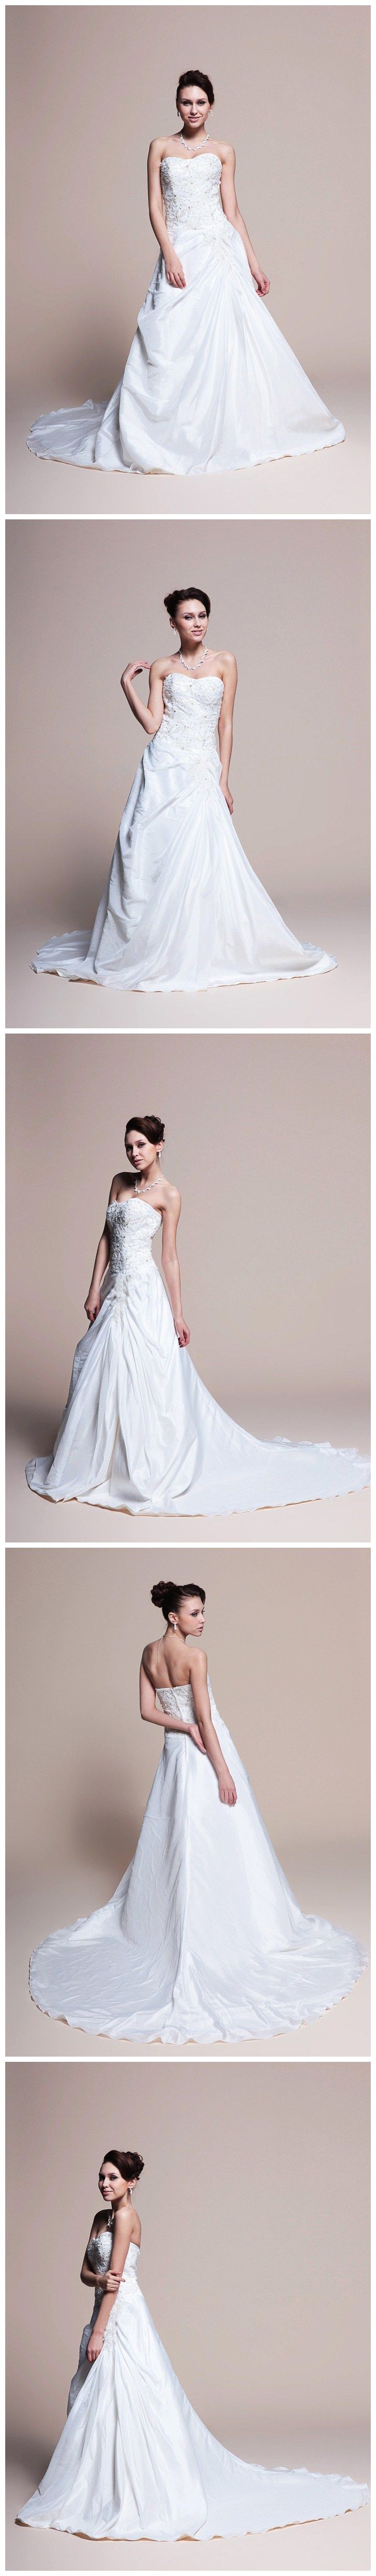 Taffeta A-Line Wedding Dress With Beaded Bodice